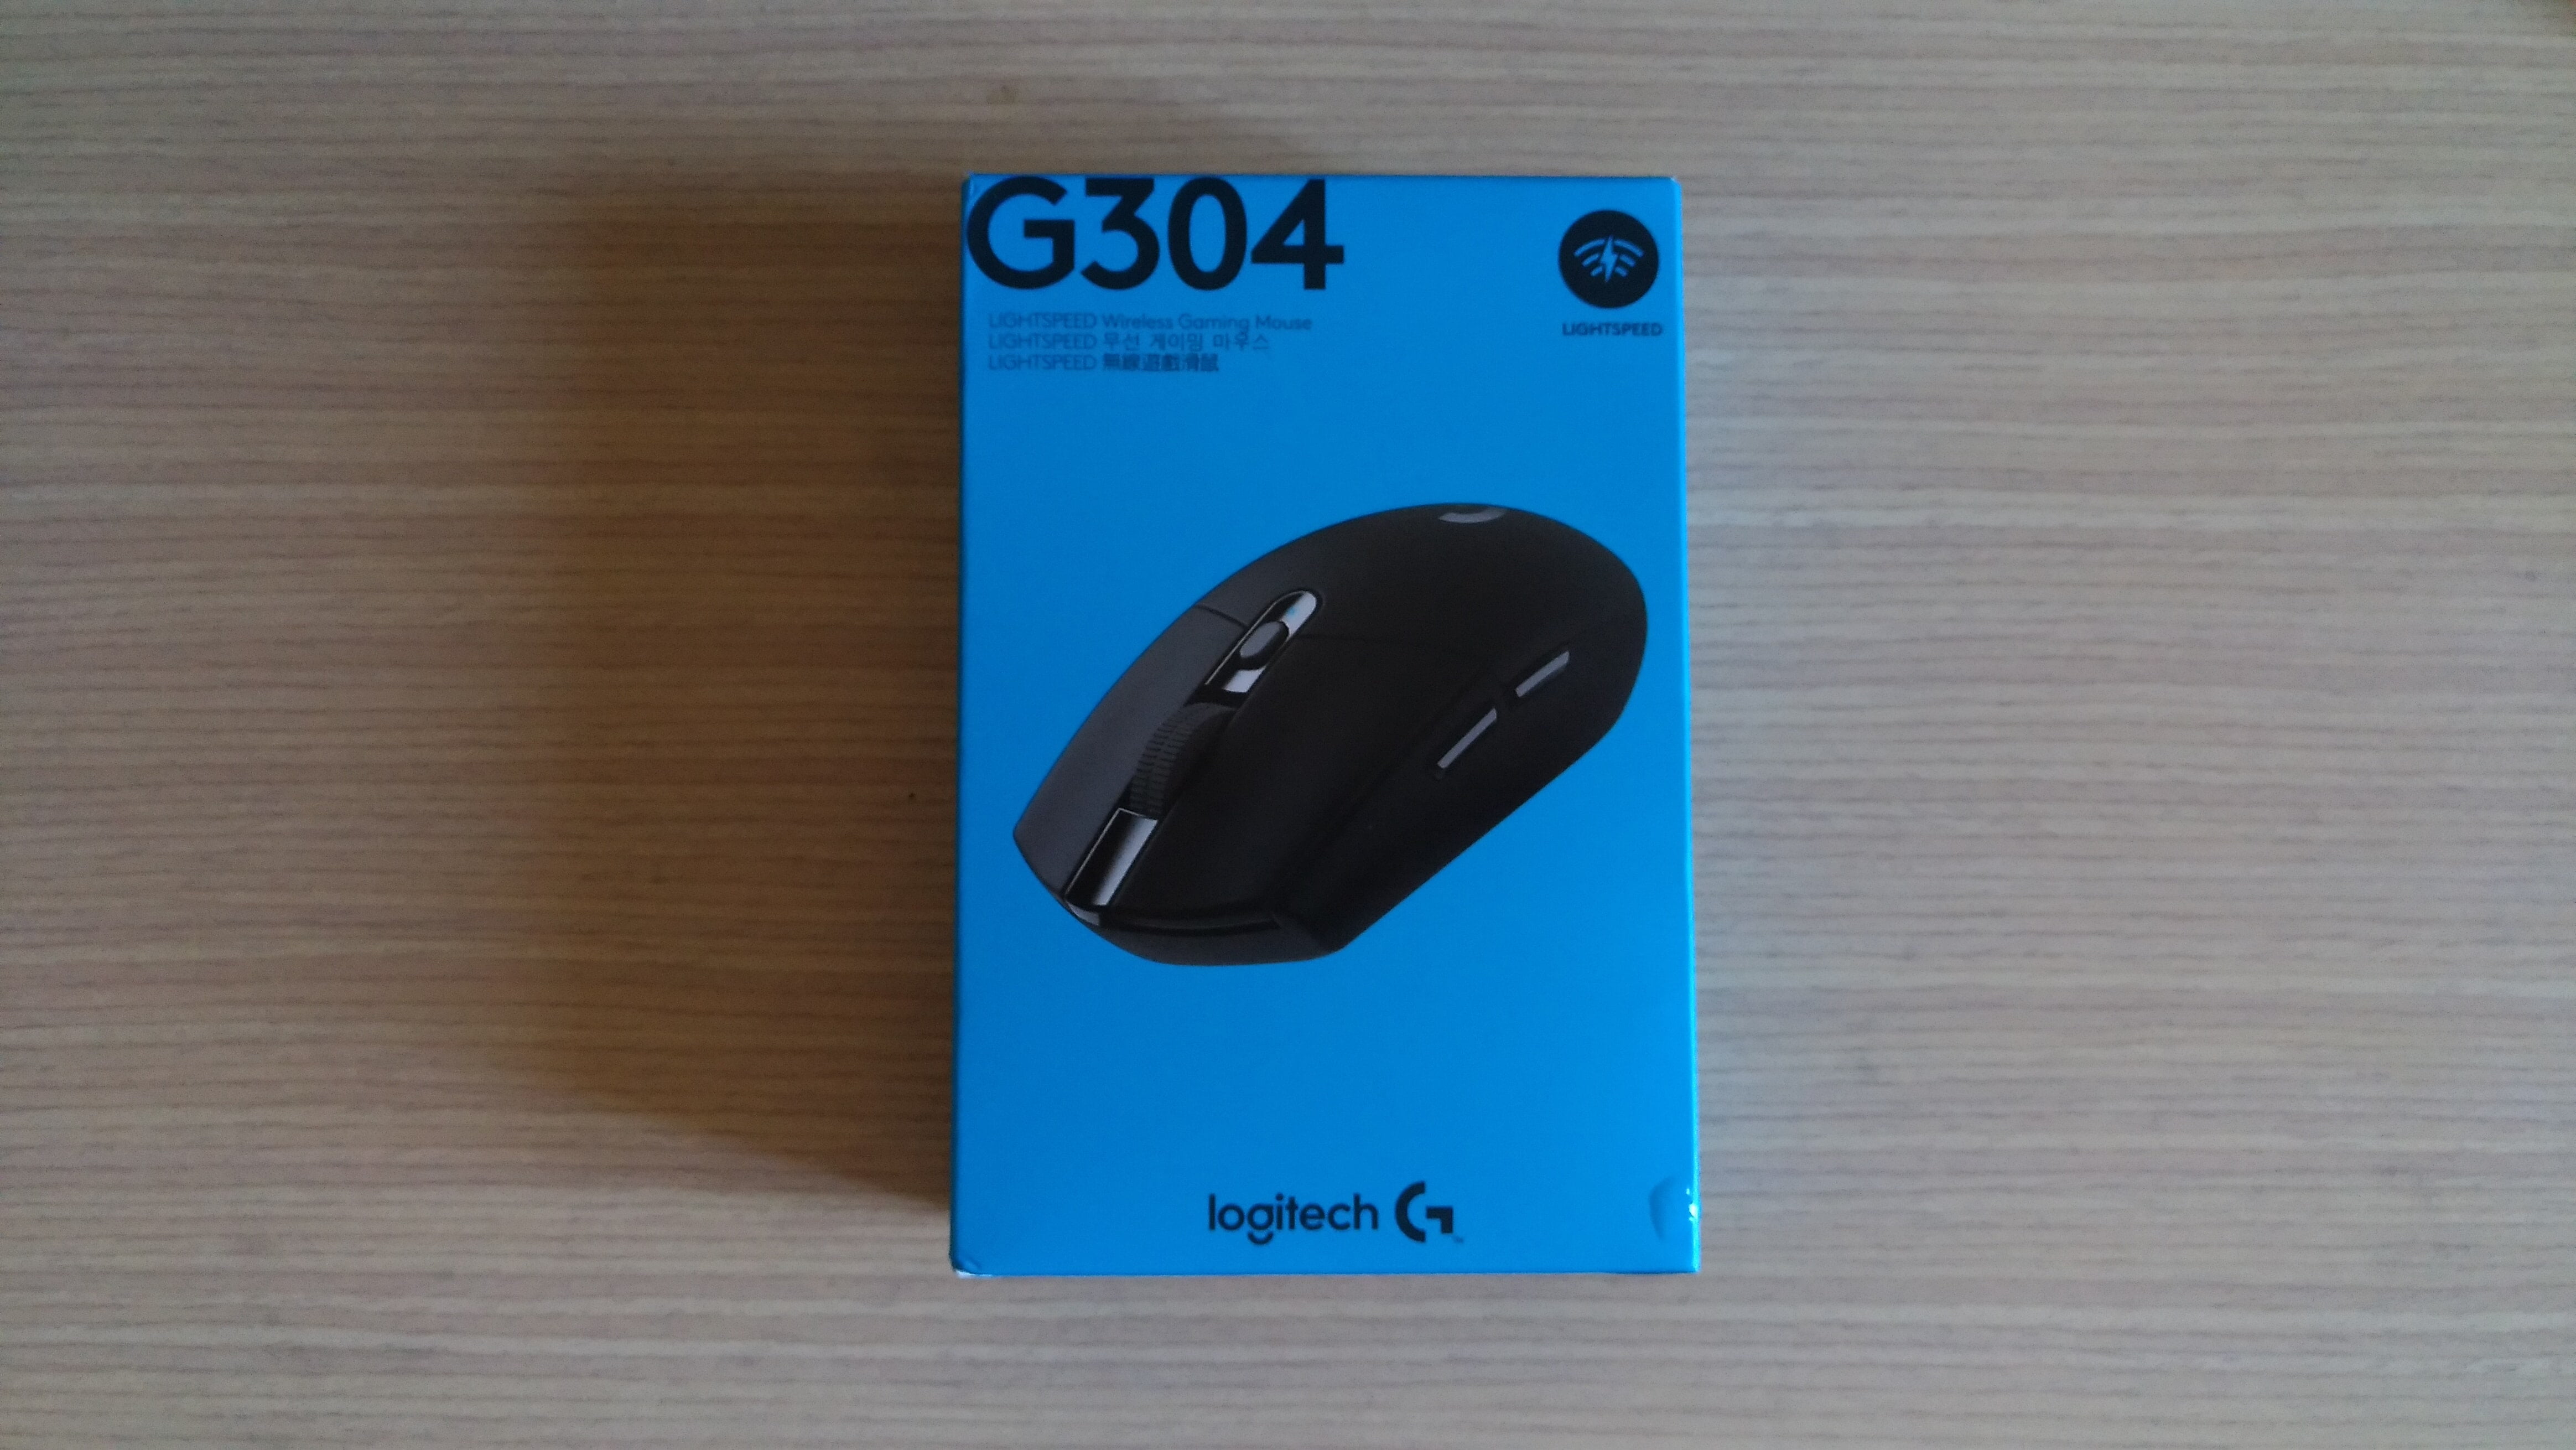 P 20181013 142813 min - [開箱] 羅技 G304 平價入門級無線滑鼠，質感良好、大小適中